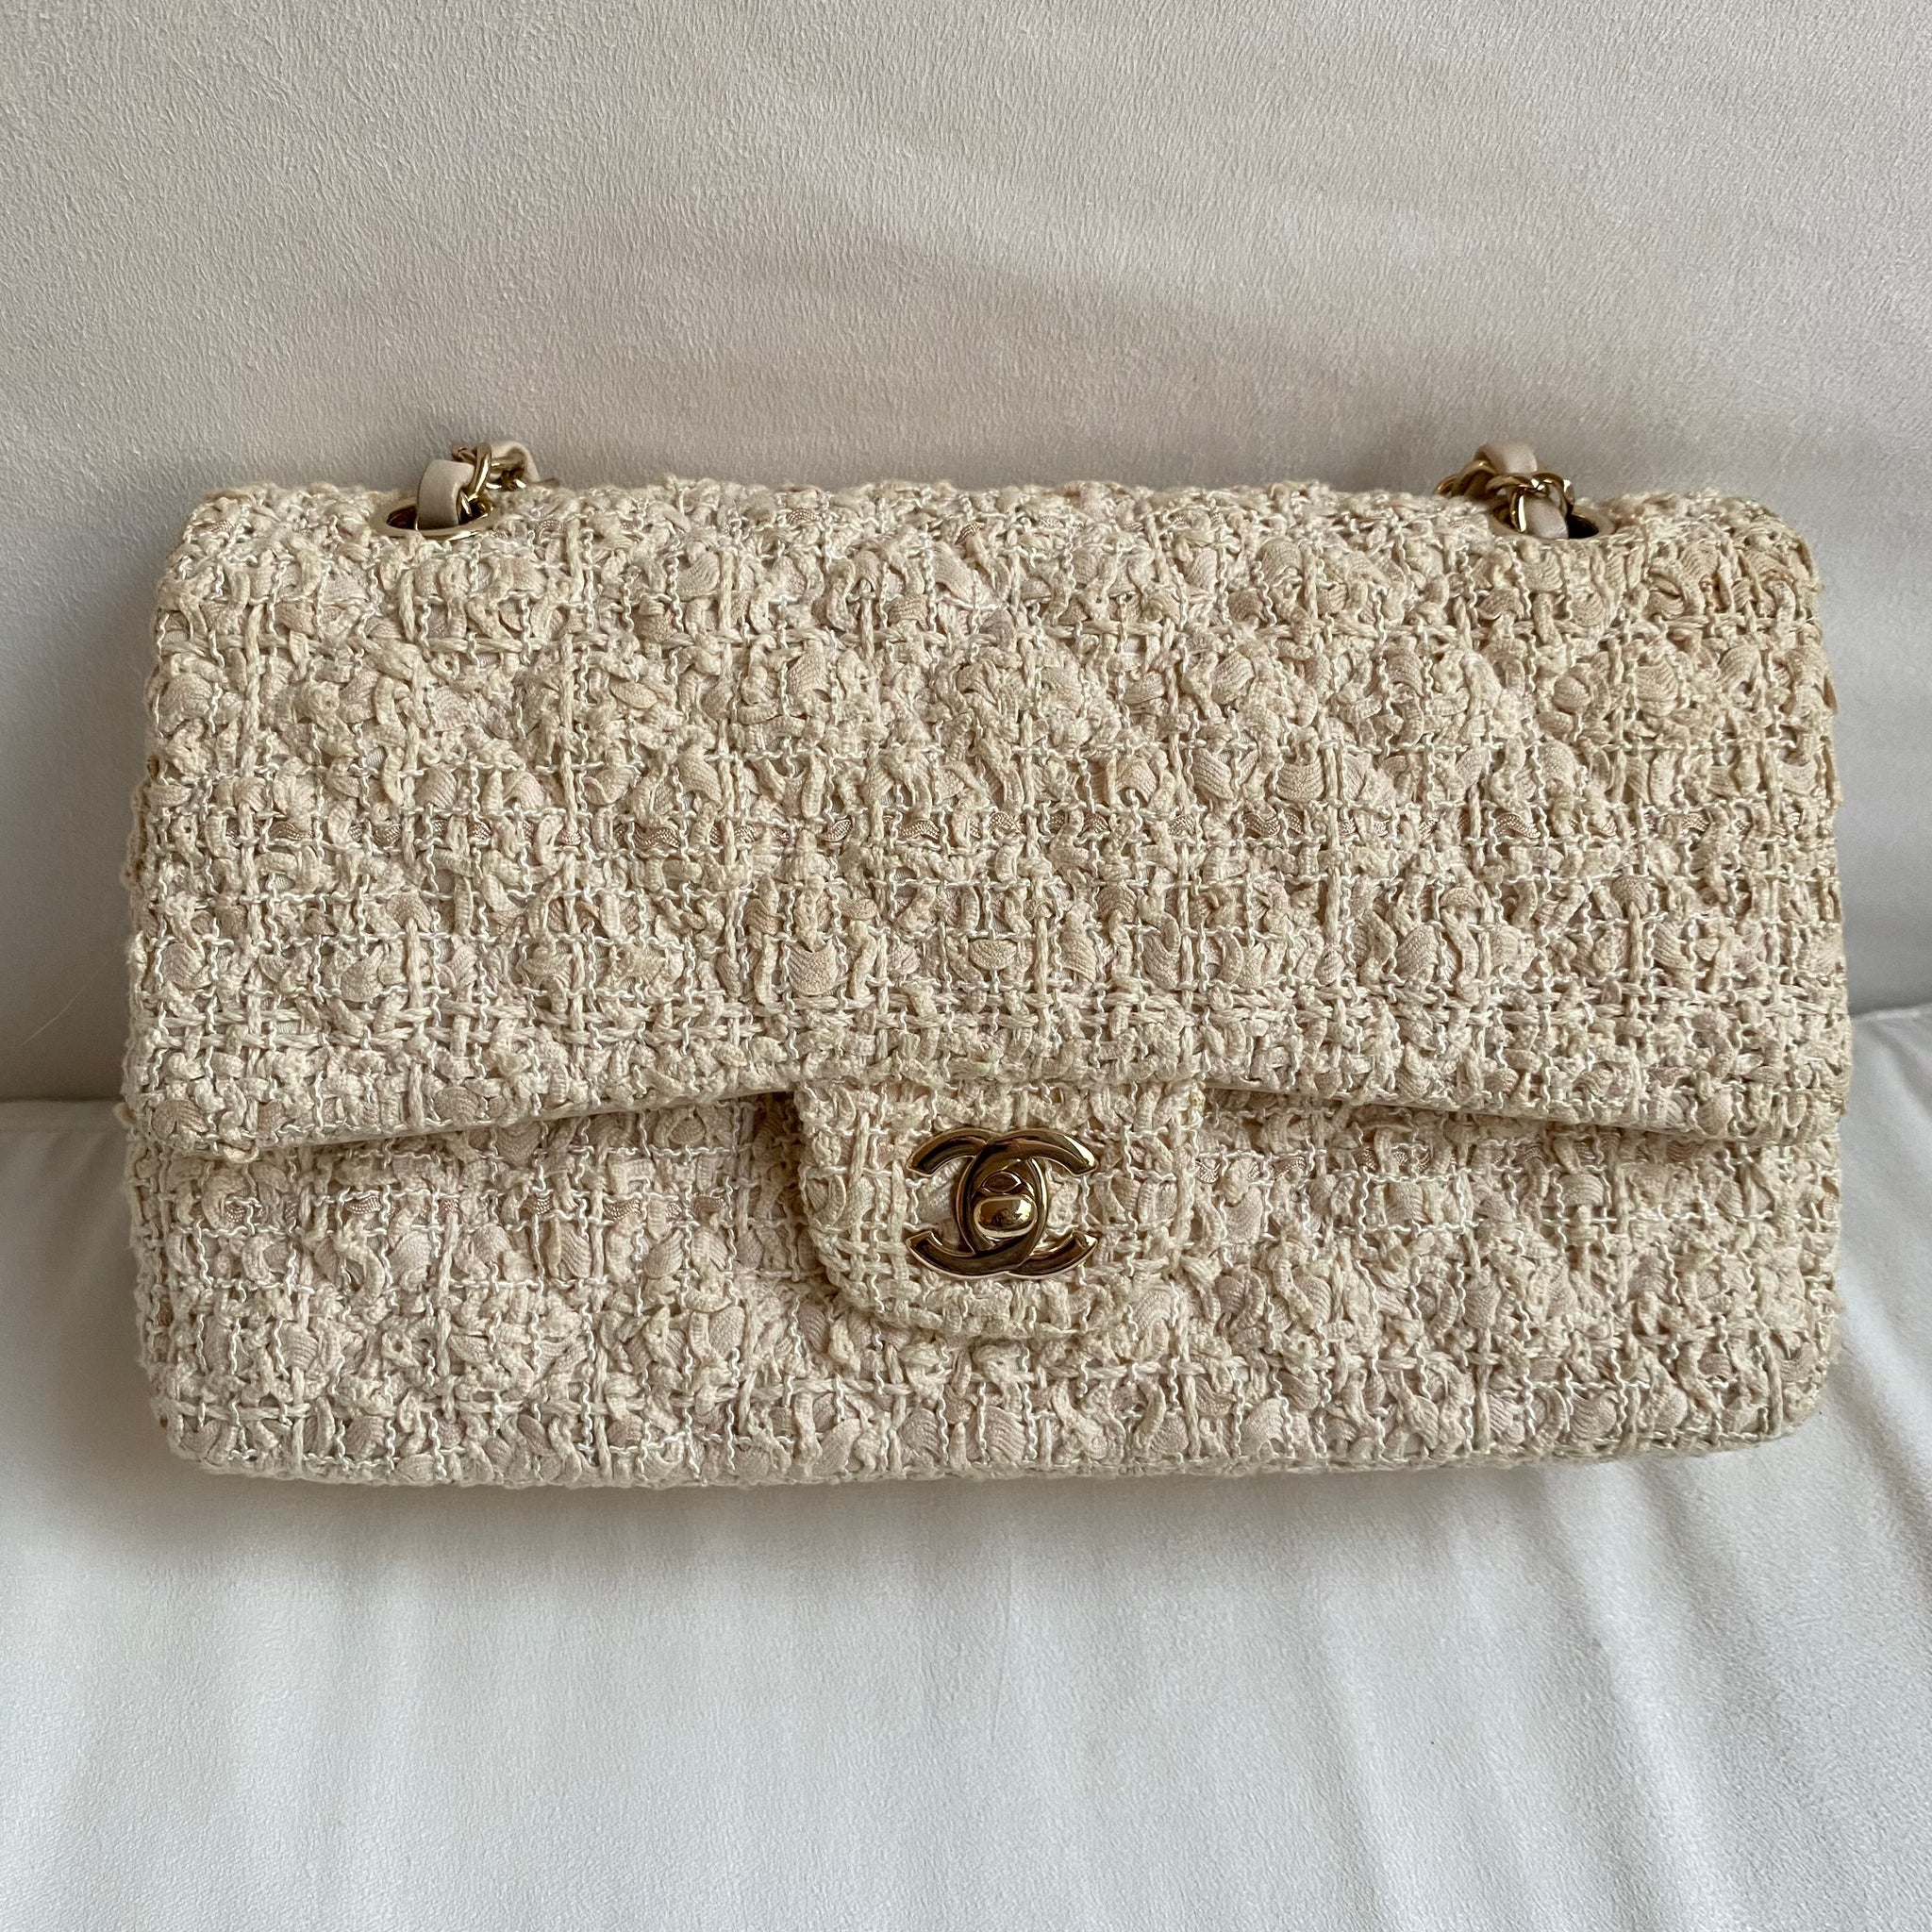 The Making Of The Chanel Iconic Tweed Handbag  Bragmybag